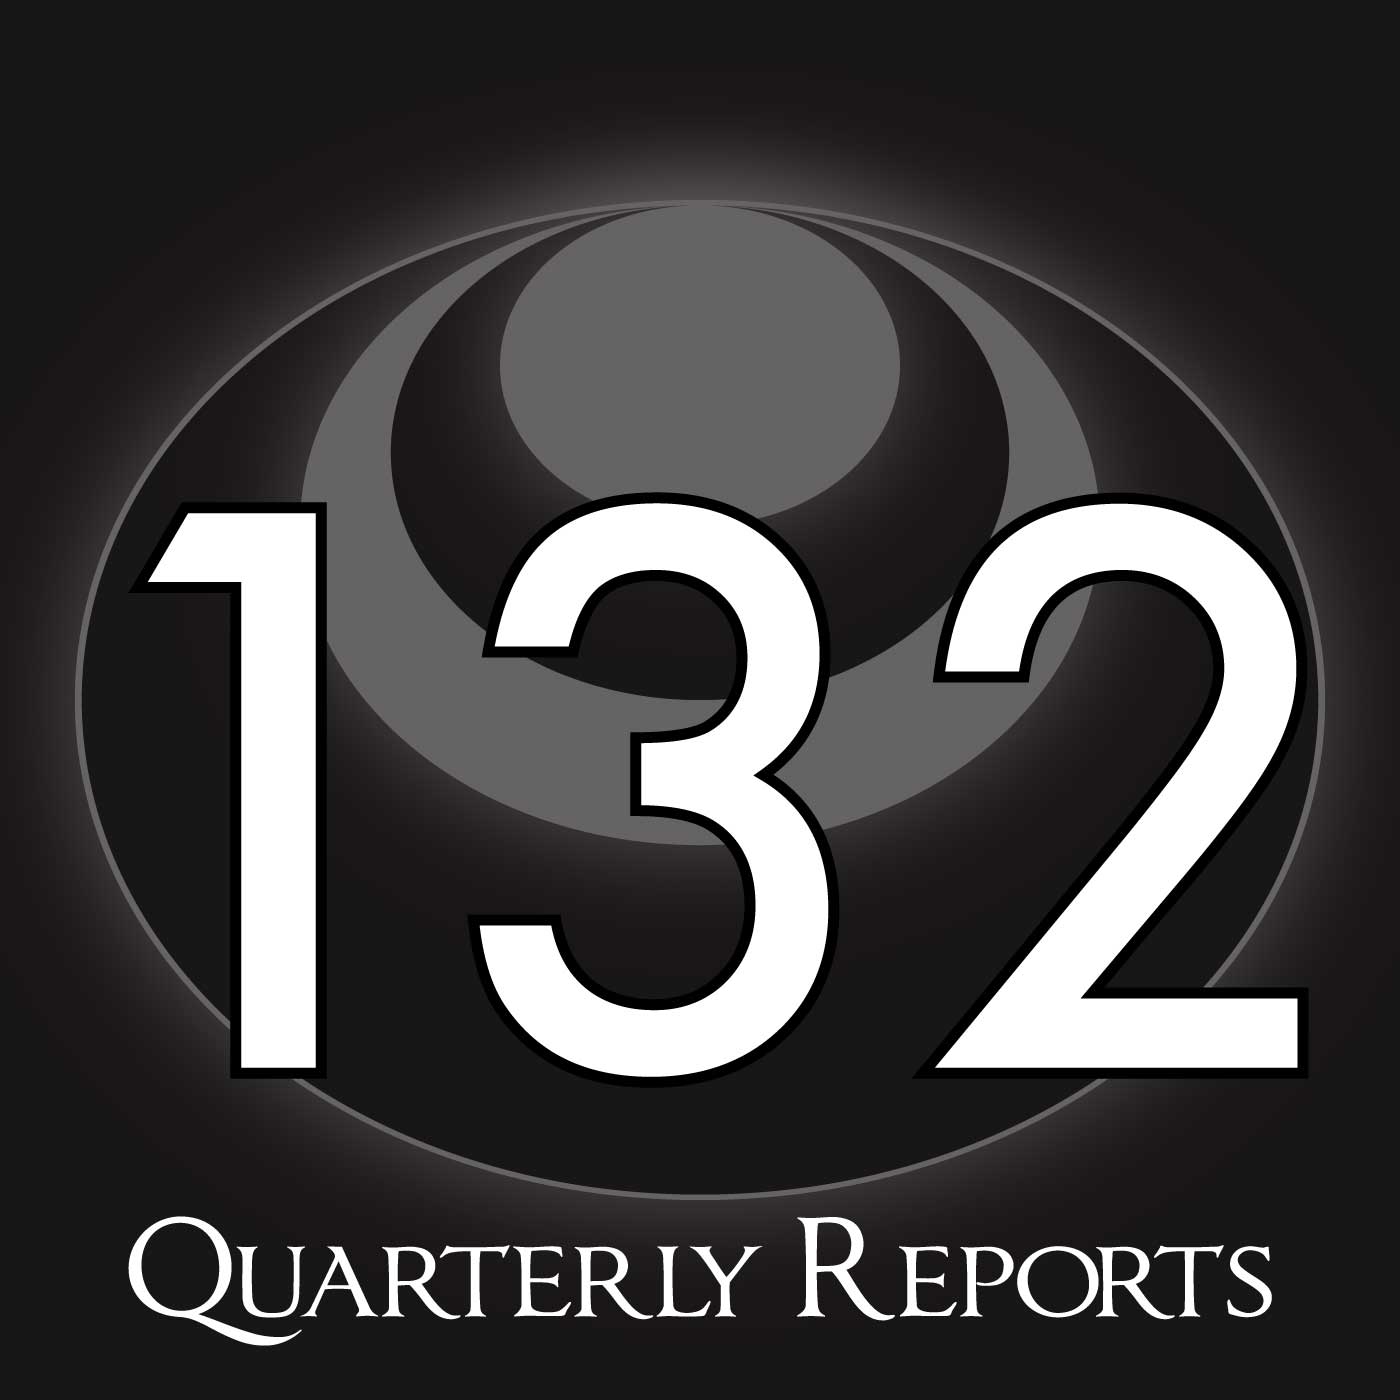 132 – Quarterly Reports